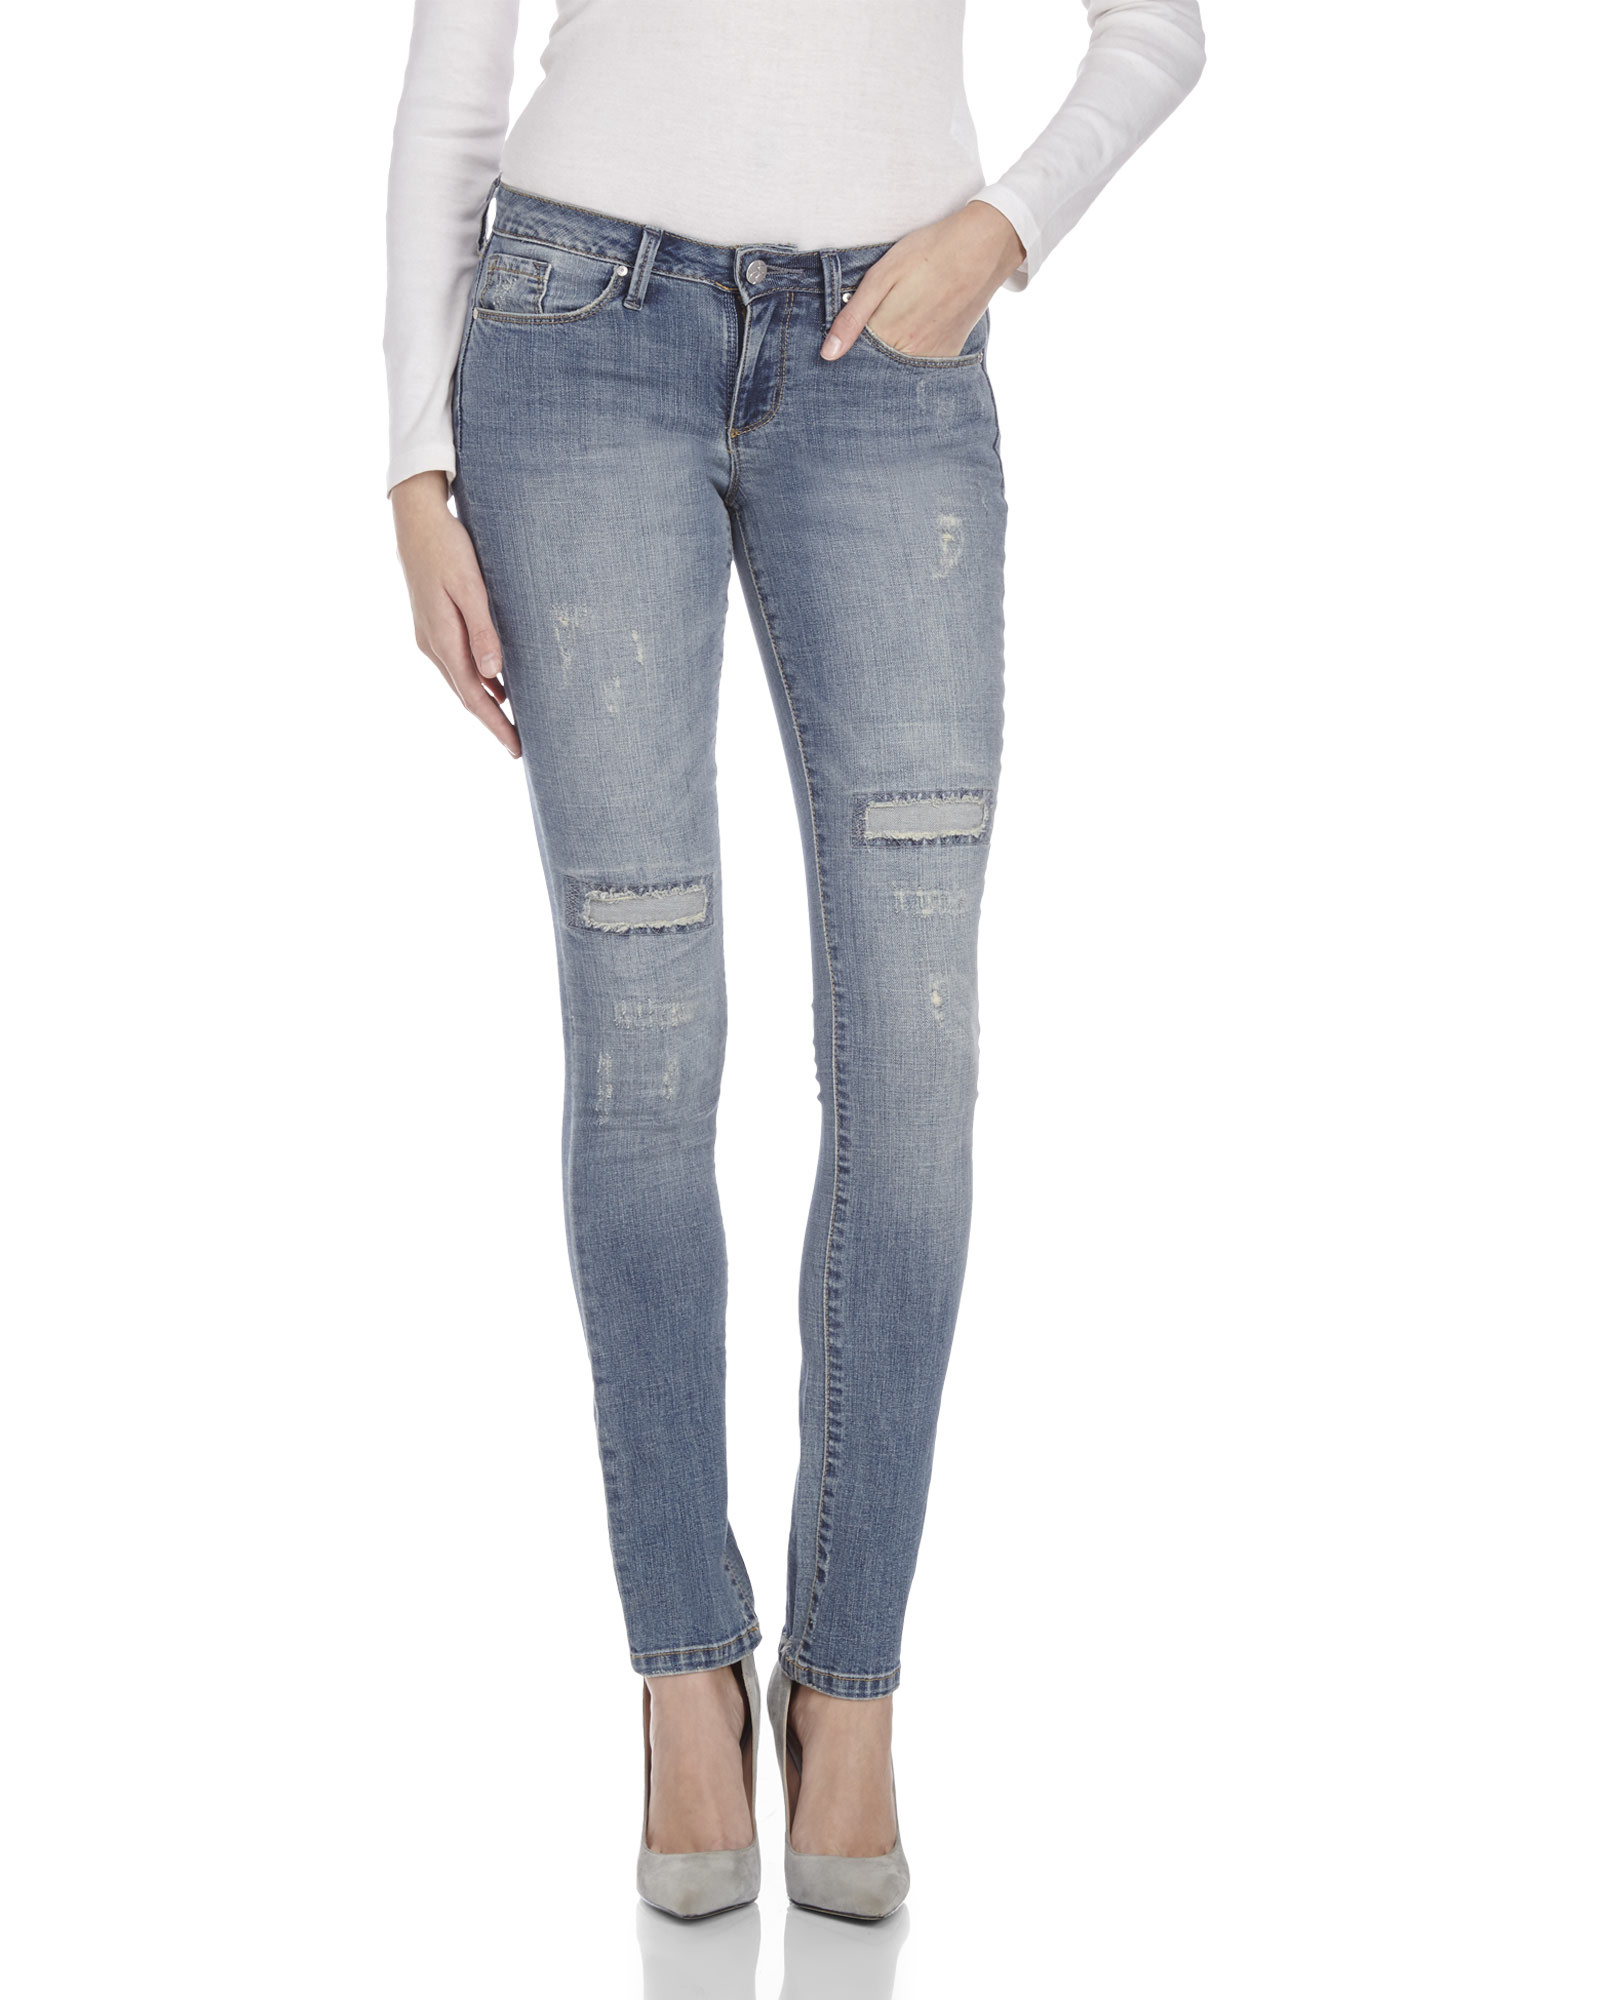 Lyst - Jessica Simpson Juniper Cherish Skinny Jeans in Blue